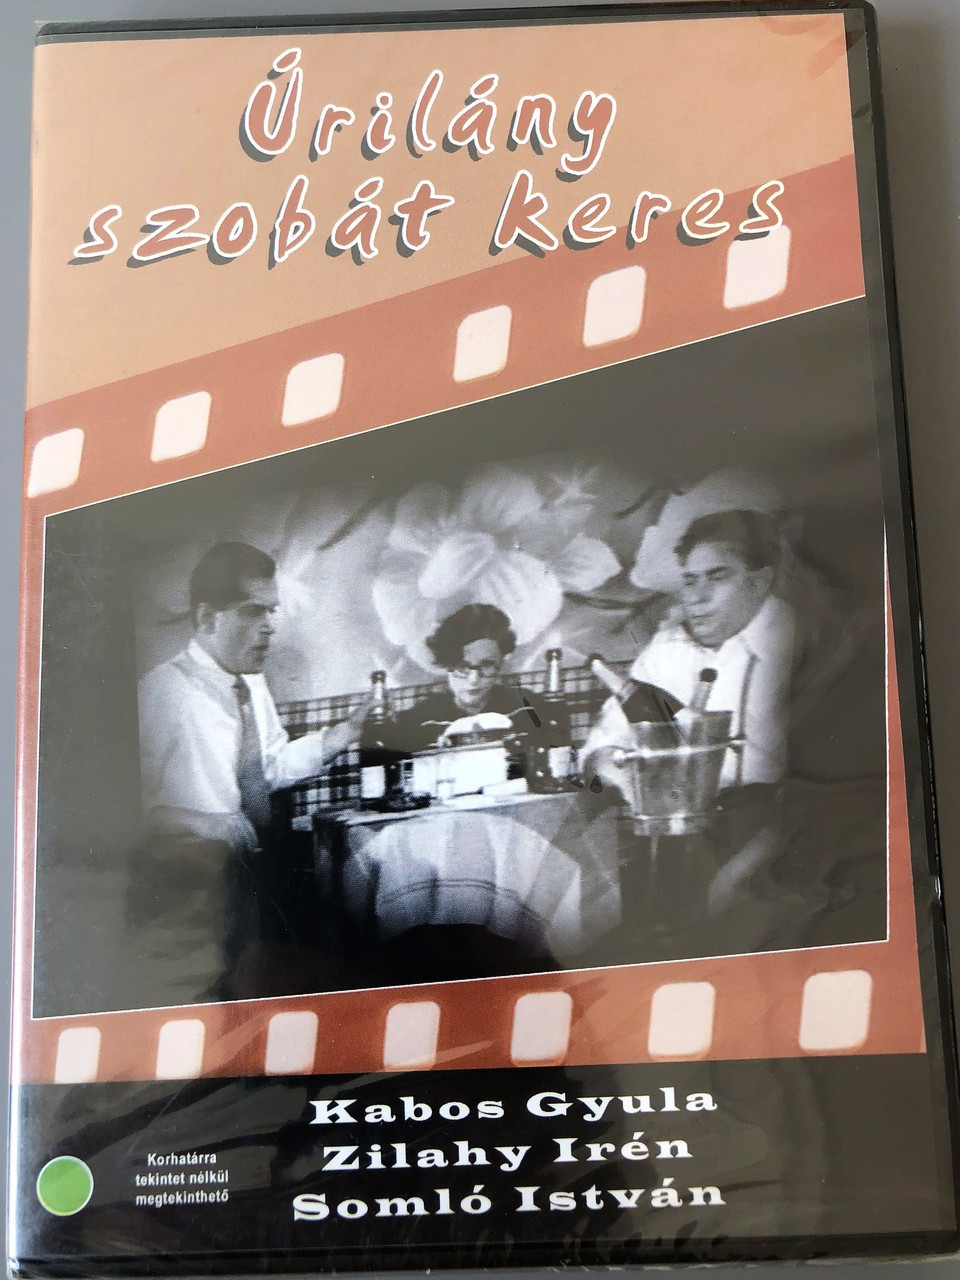 Úrilány szobát keres 1937 DVD Rejtő Jenő / Kabos Gyula, Zilahy Irèn / régi  magyar filmek / Lady Seeks a Room is a 1937 Hungarian comedy film directed  by Béla Balogh / Hungarian Only Options - bibleinmylanguage